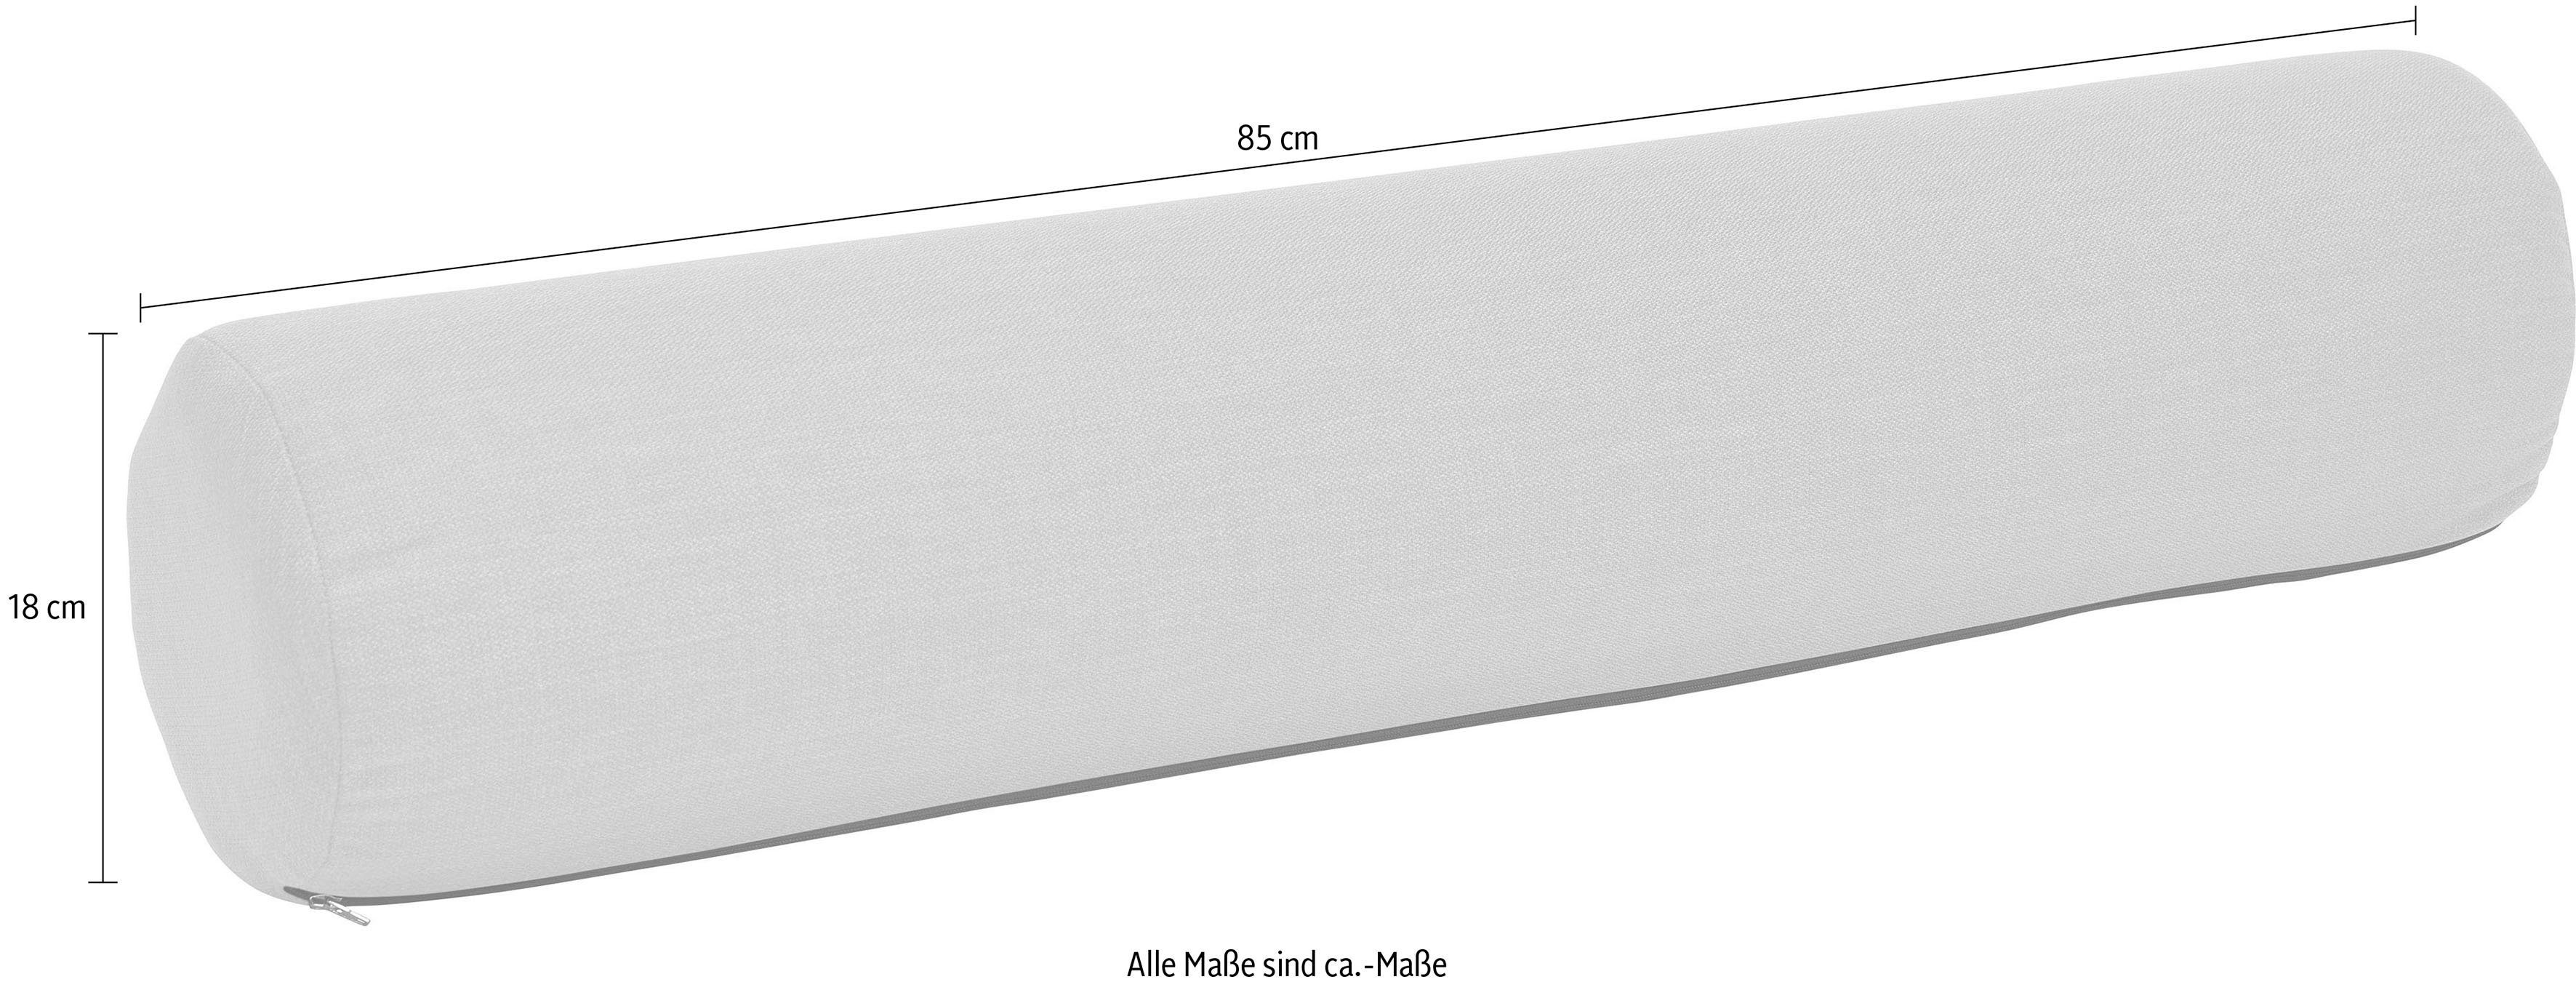 Müller SMALL LIVING Kopfstütze hochwertigen Bezugsstoffen in zwei RG-25-Nackenrolle